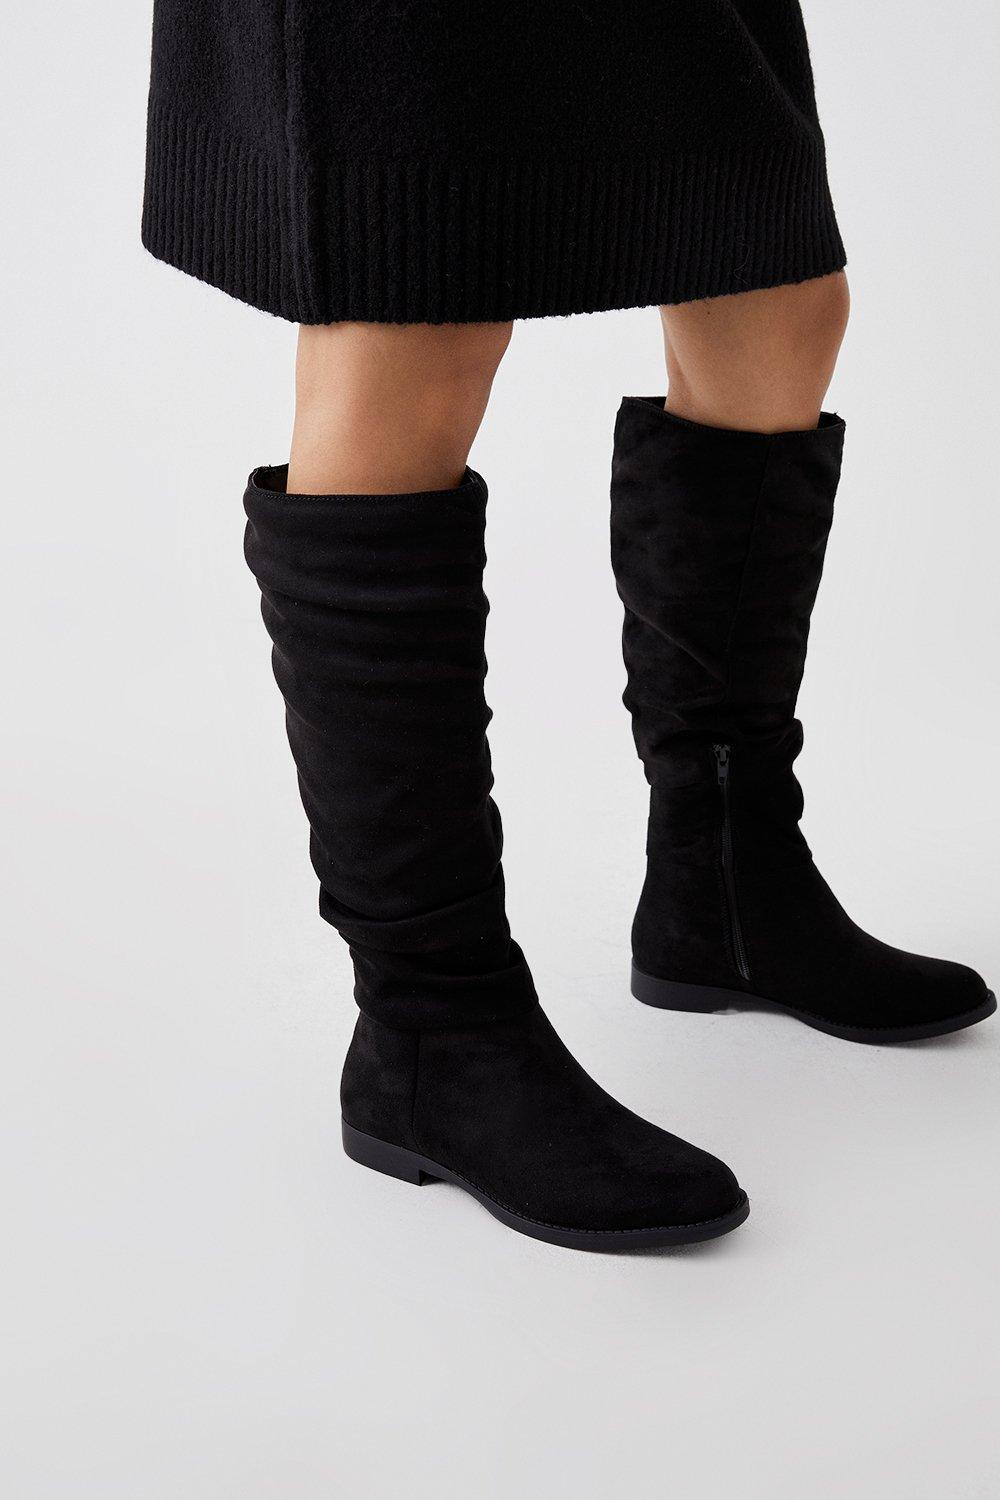 Women’s Karina Flat Ruched Boots - natural black - 8